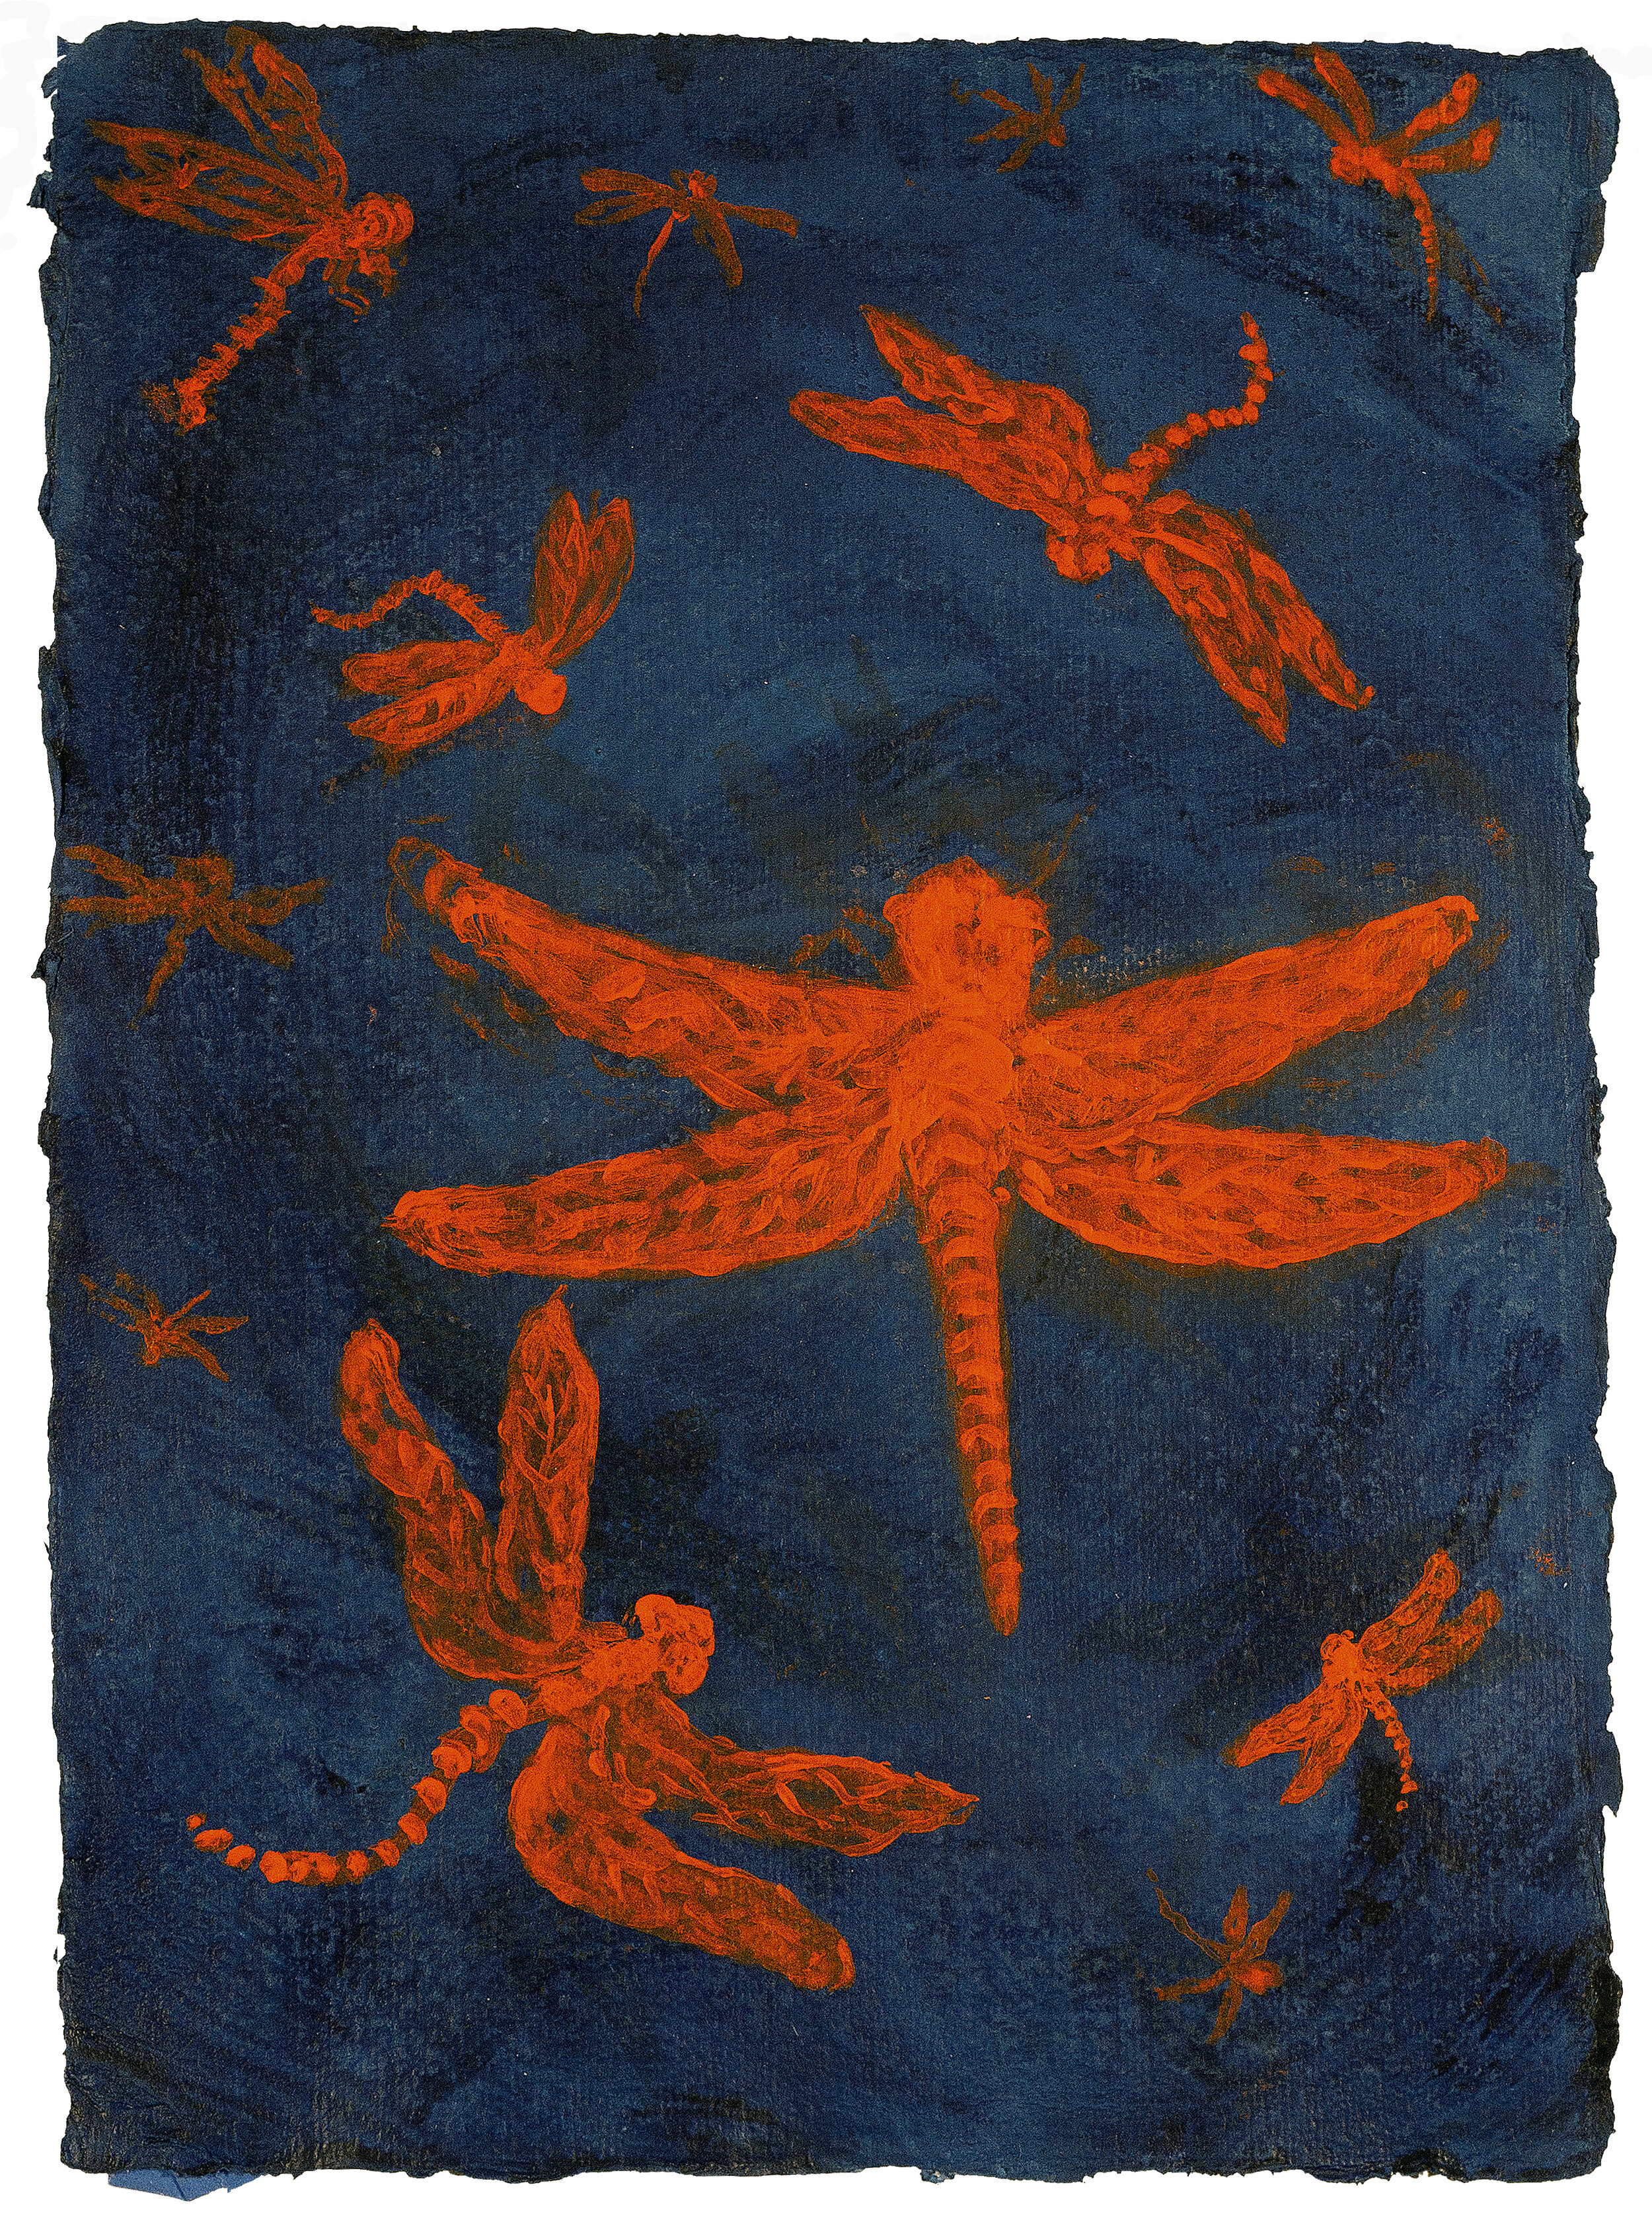  Helen Oji  Tonbo , 2020 Acrylic on Khadi paper 11 1/2 x 8 1/2 inches 